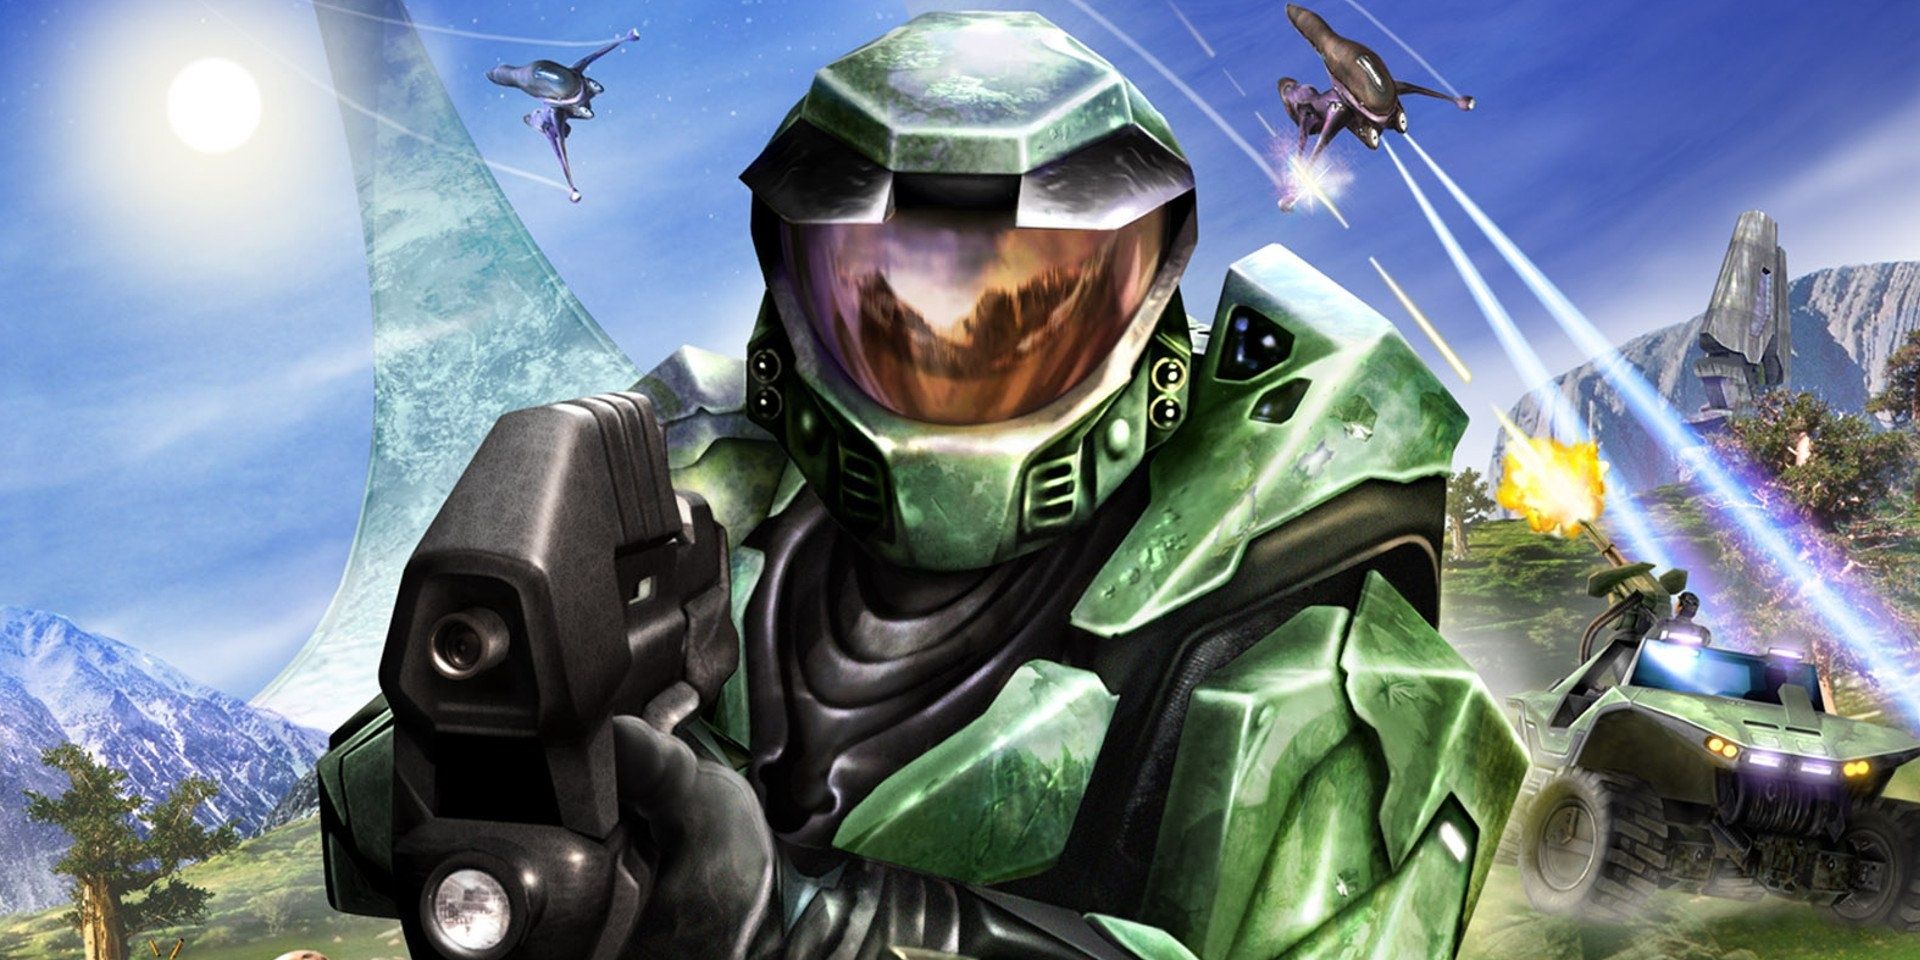 Halo: Combat Evolved promotional image